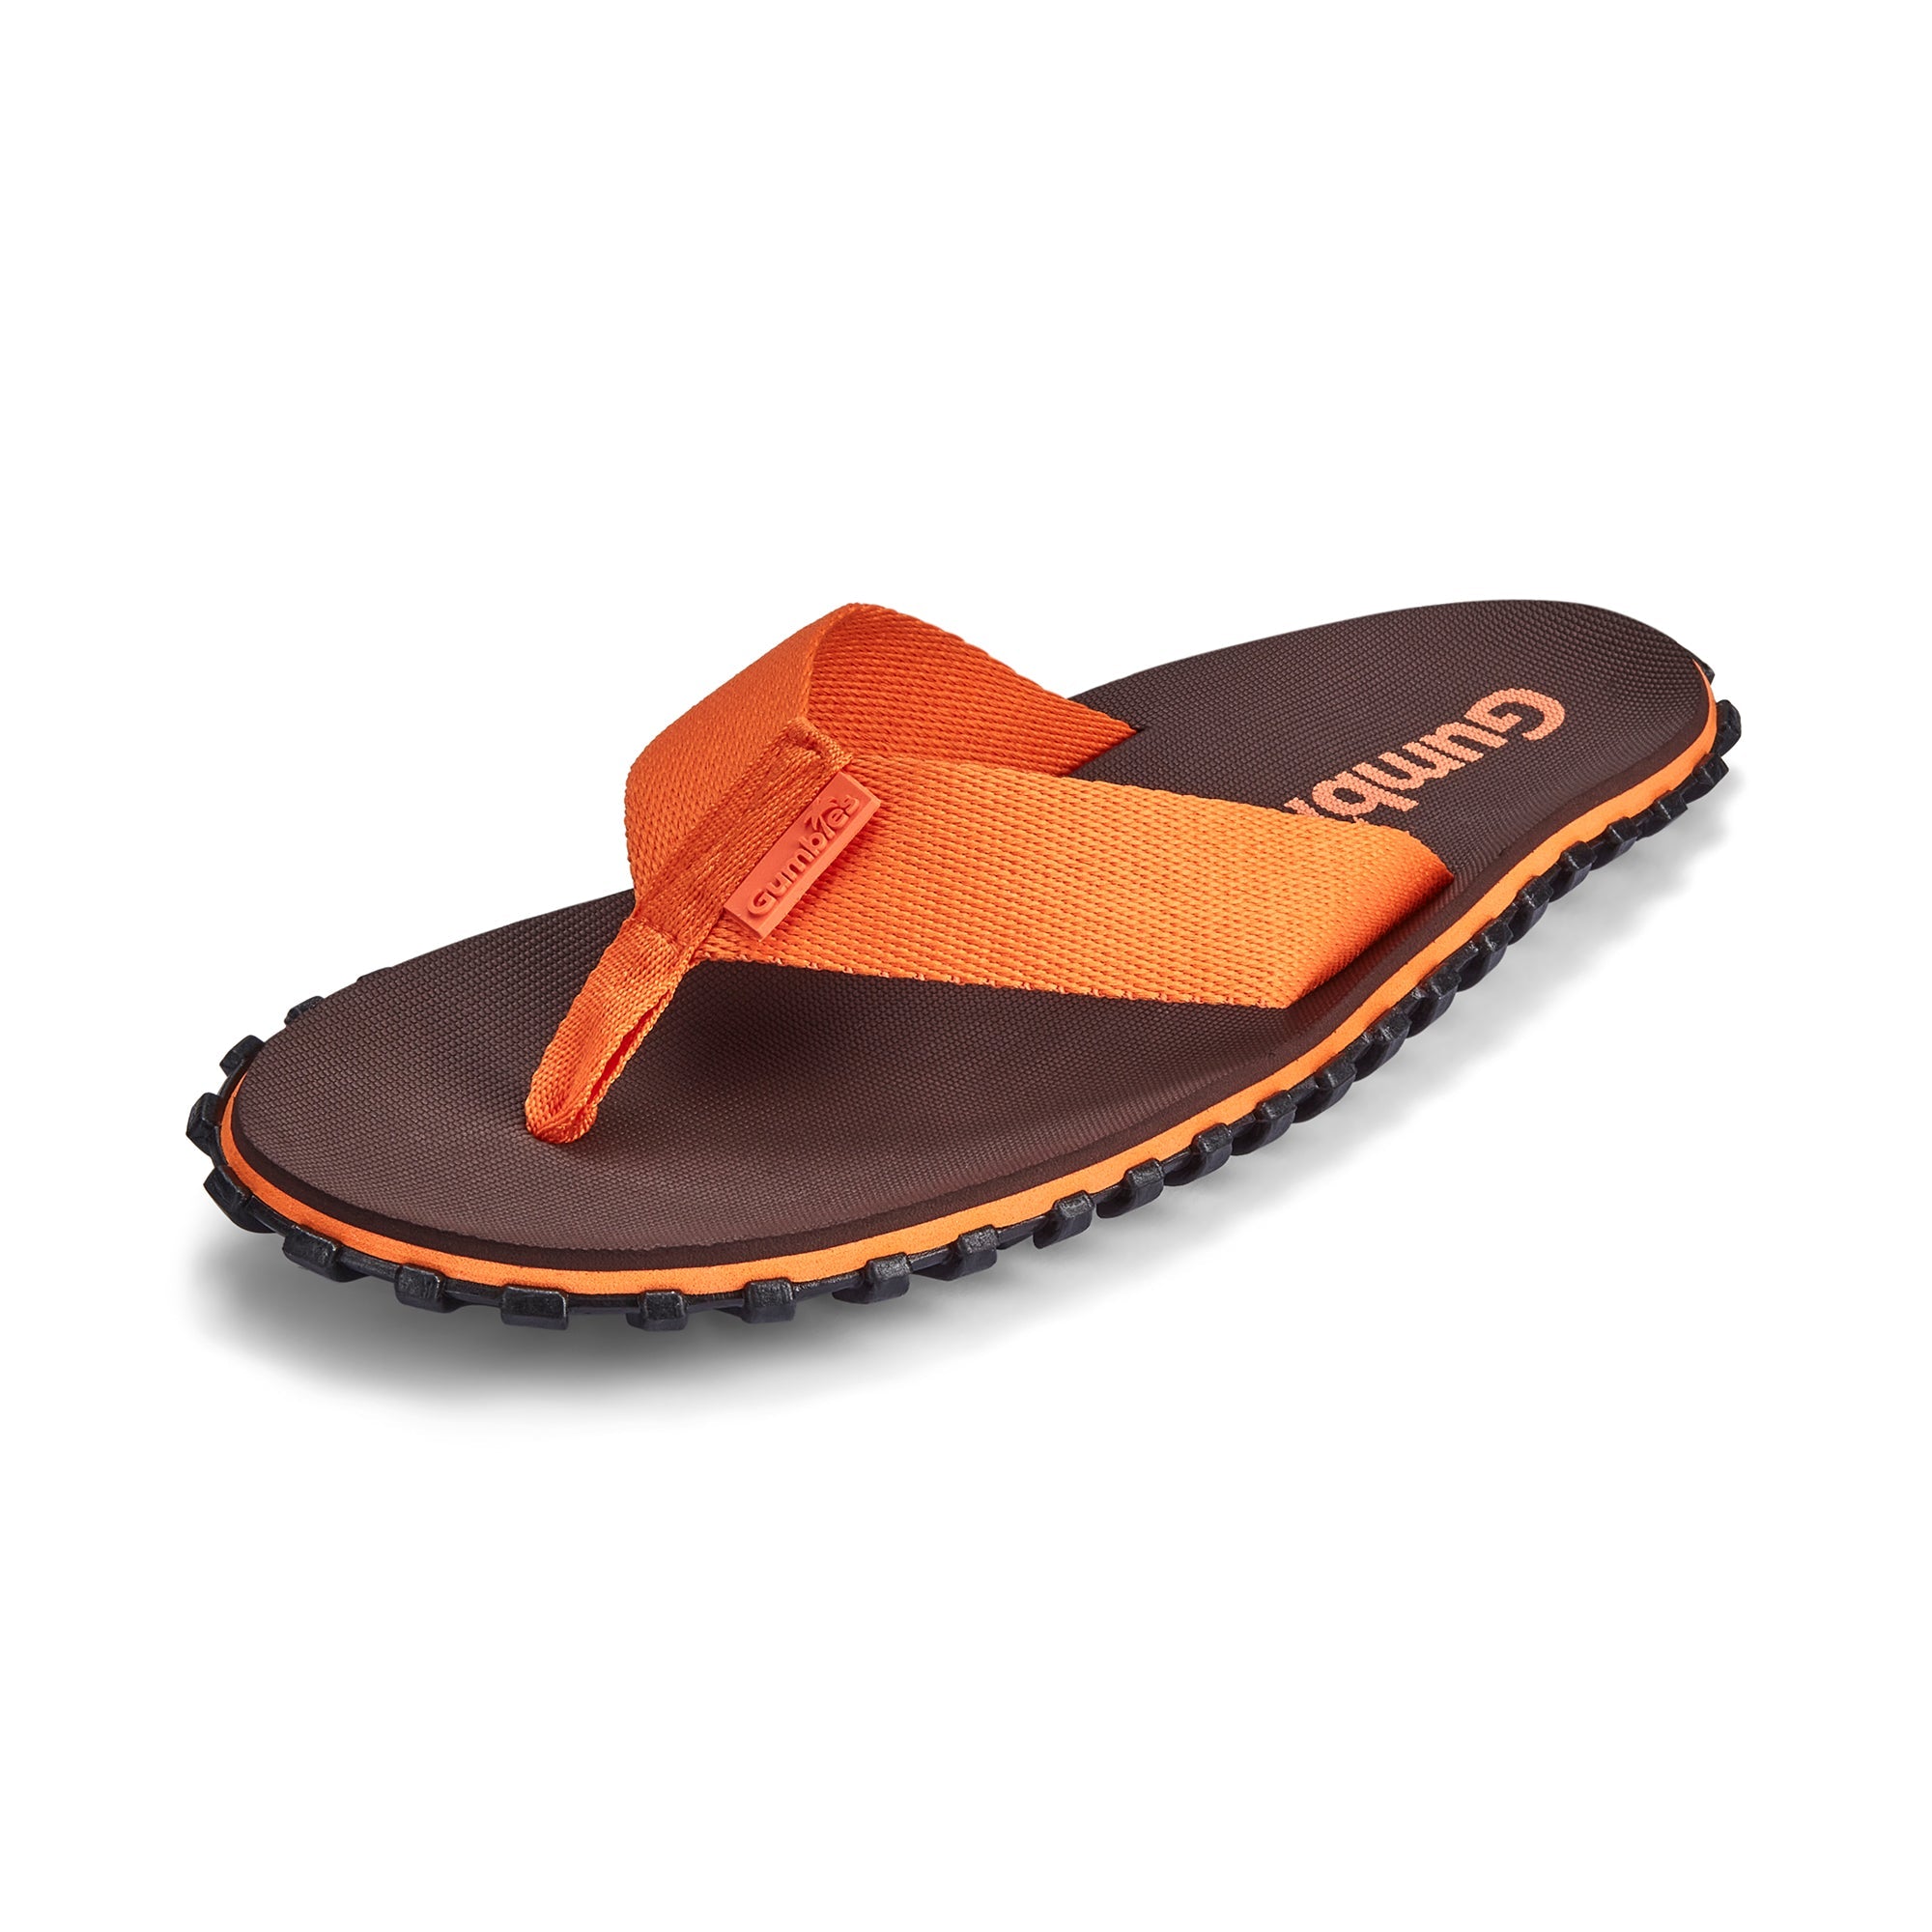 Duckbill Flip-Flops - Men's - Brown & Orange